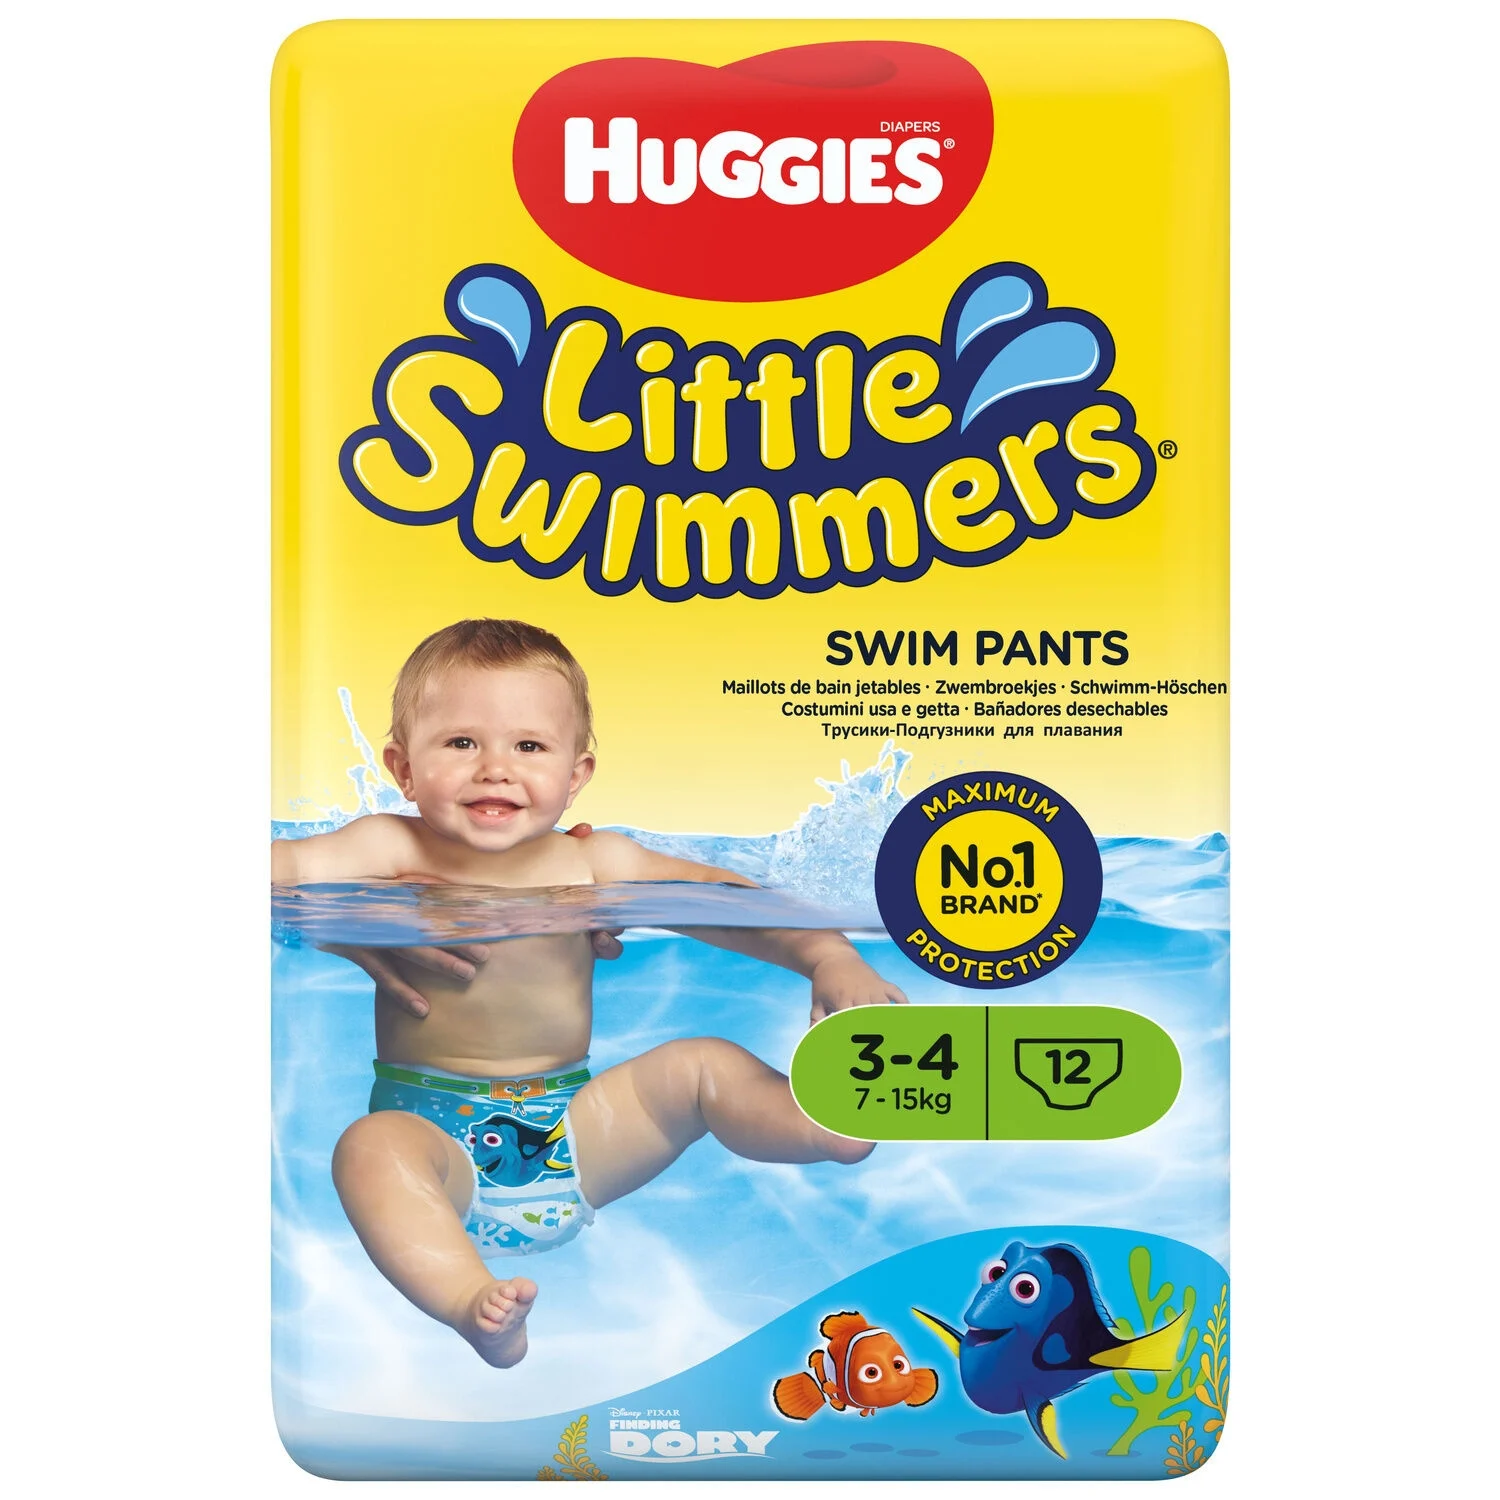 X12 Little Swimmers T3 4 Huggi